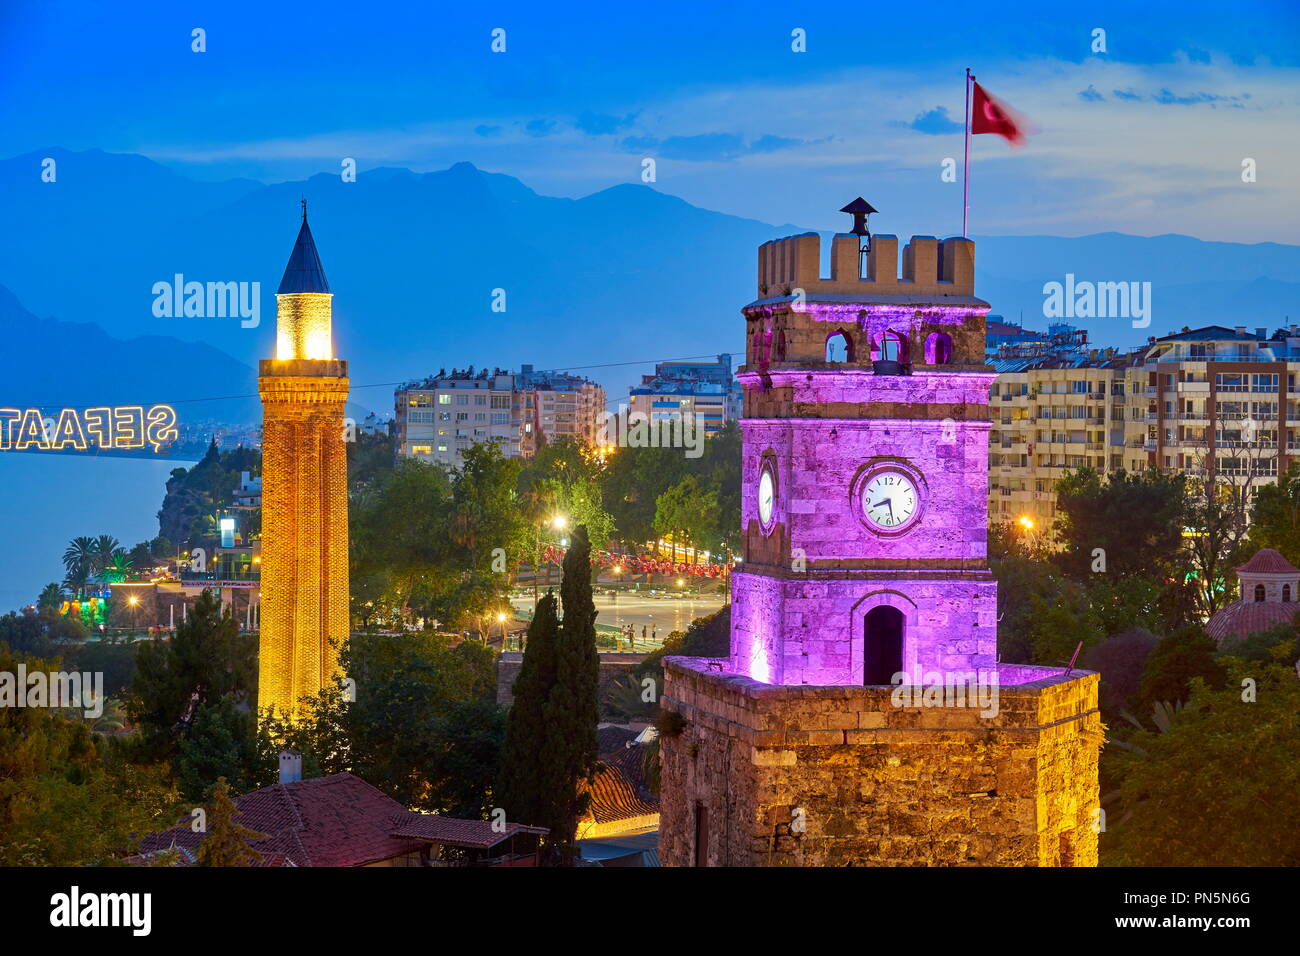 Clock Tower, Kaleici Old Town, Alanaya, Turkey Stock Photo